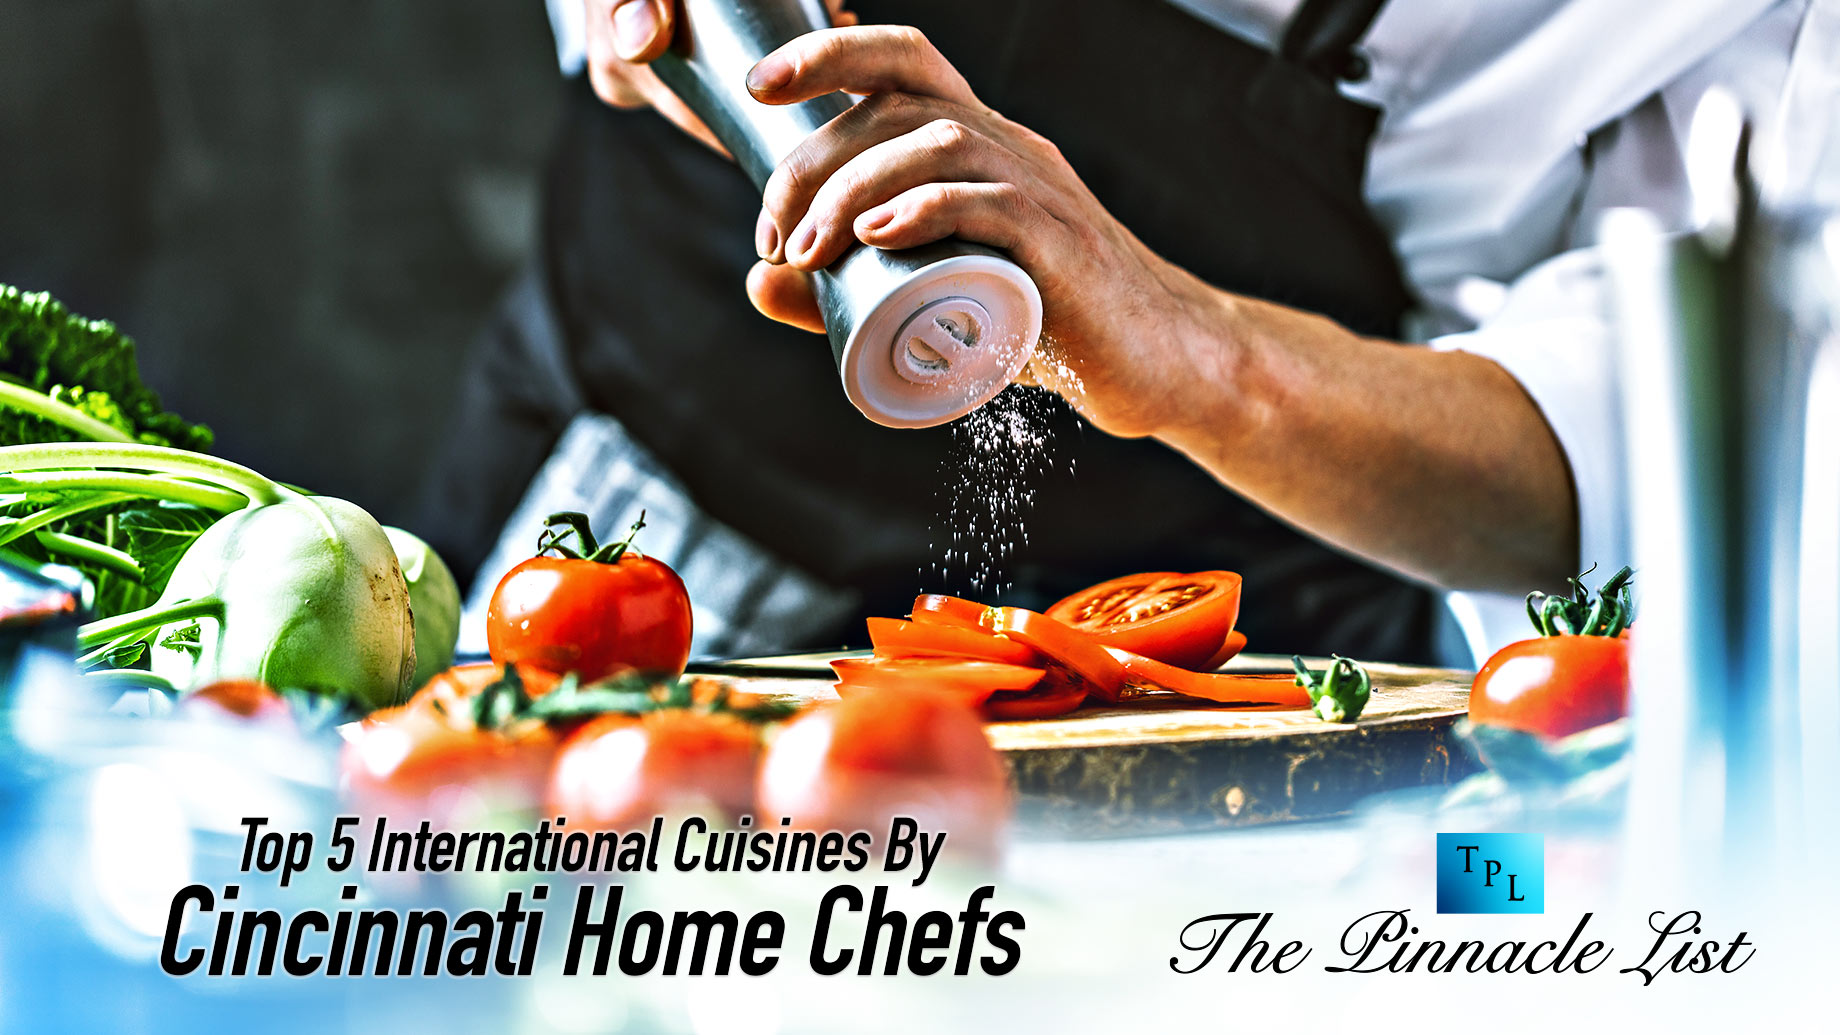 Top 5 International Cuisines By Cincinnati Home Chefs